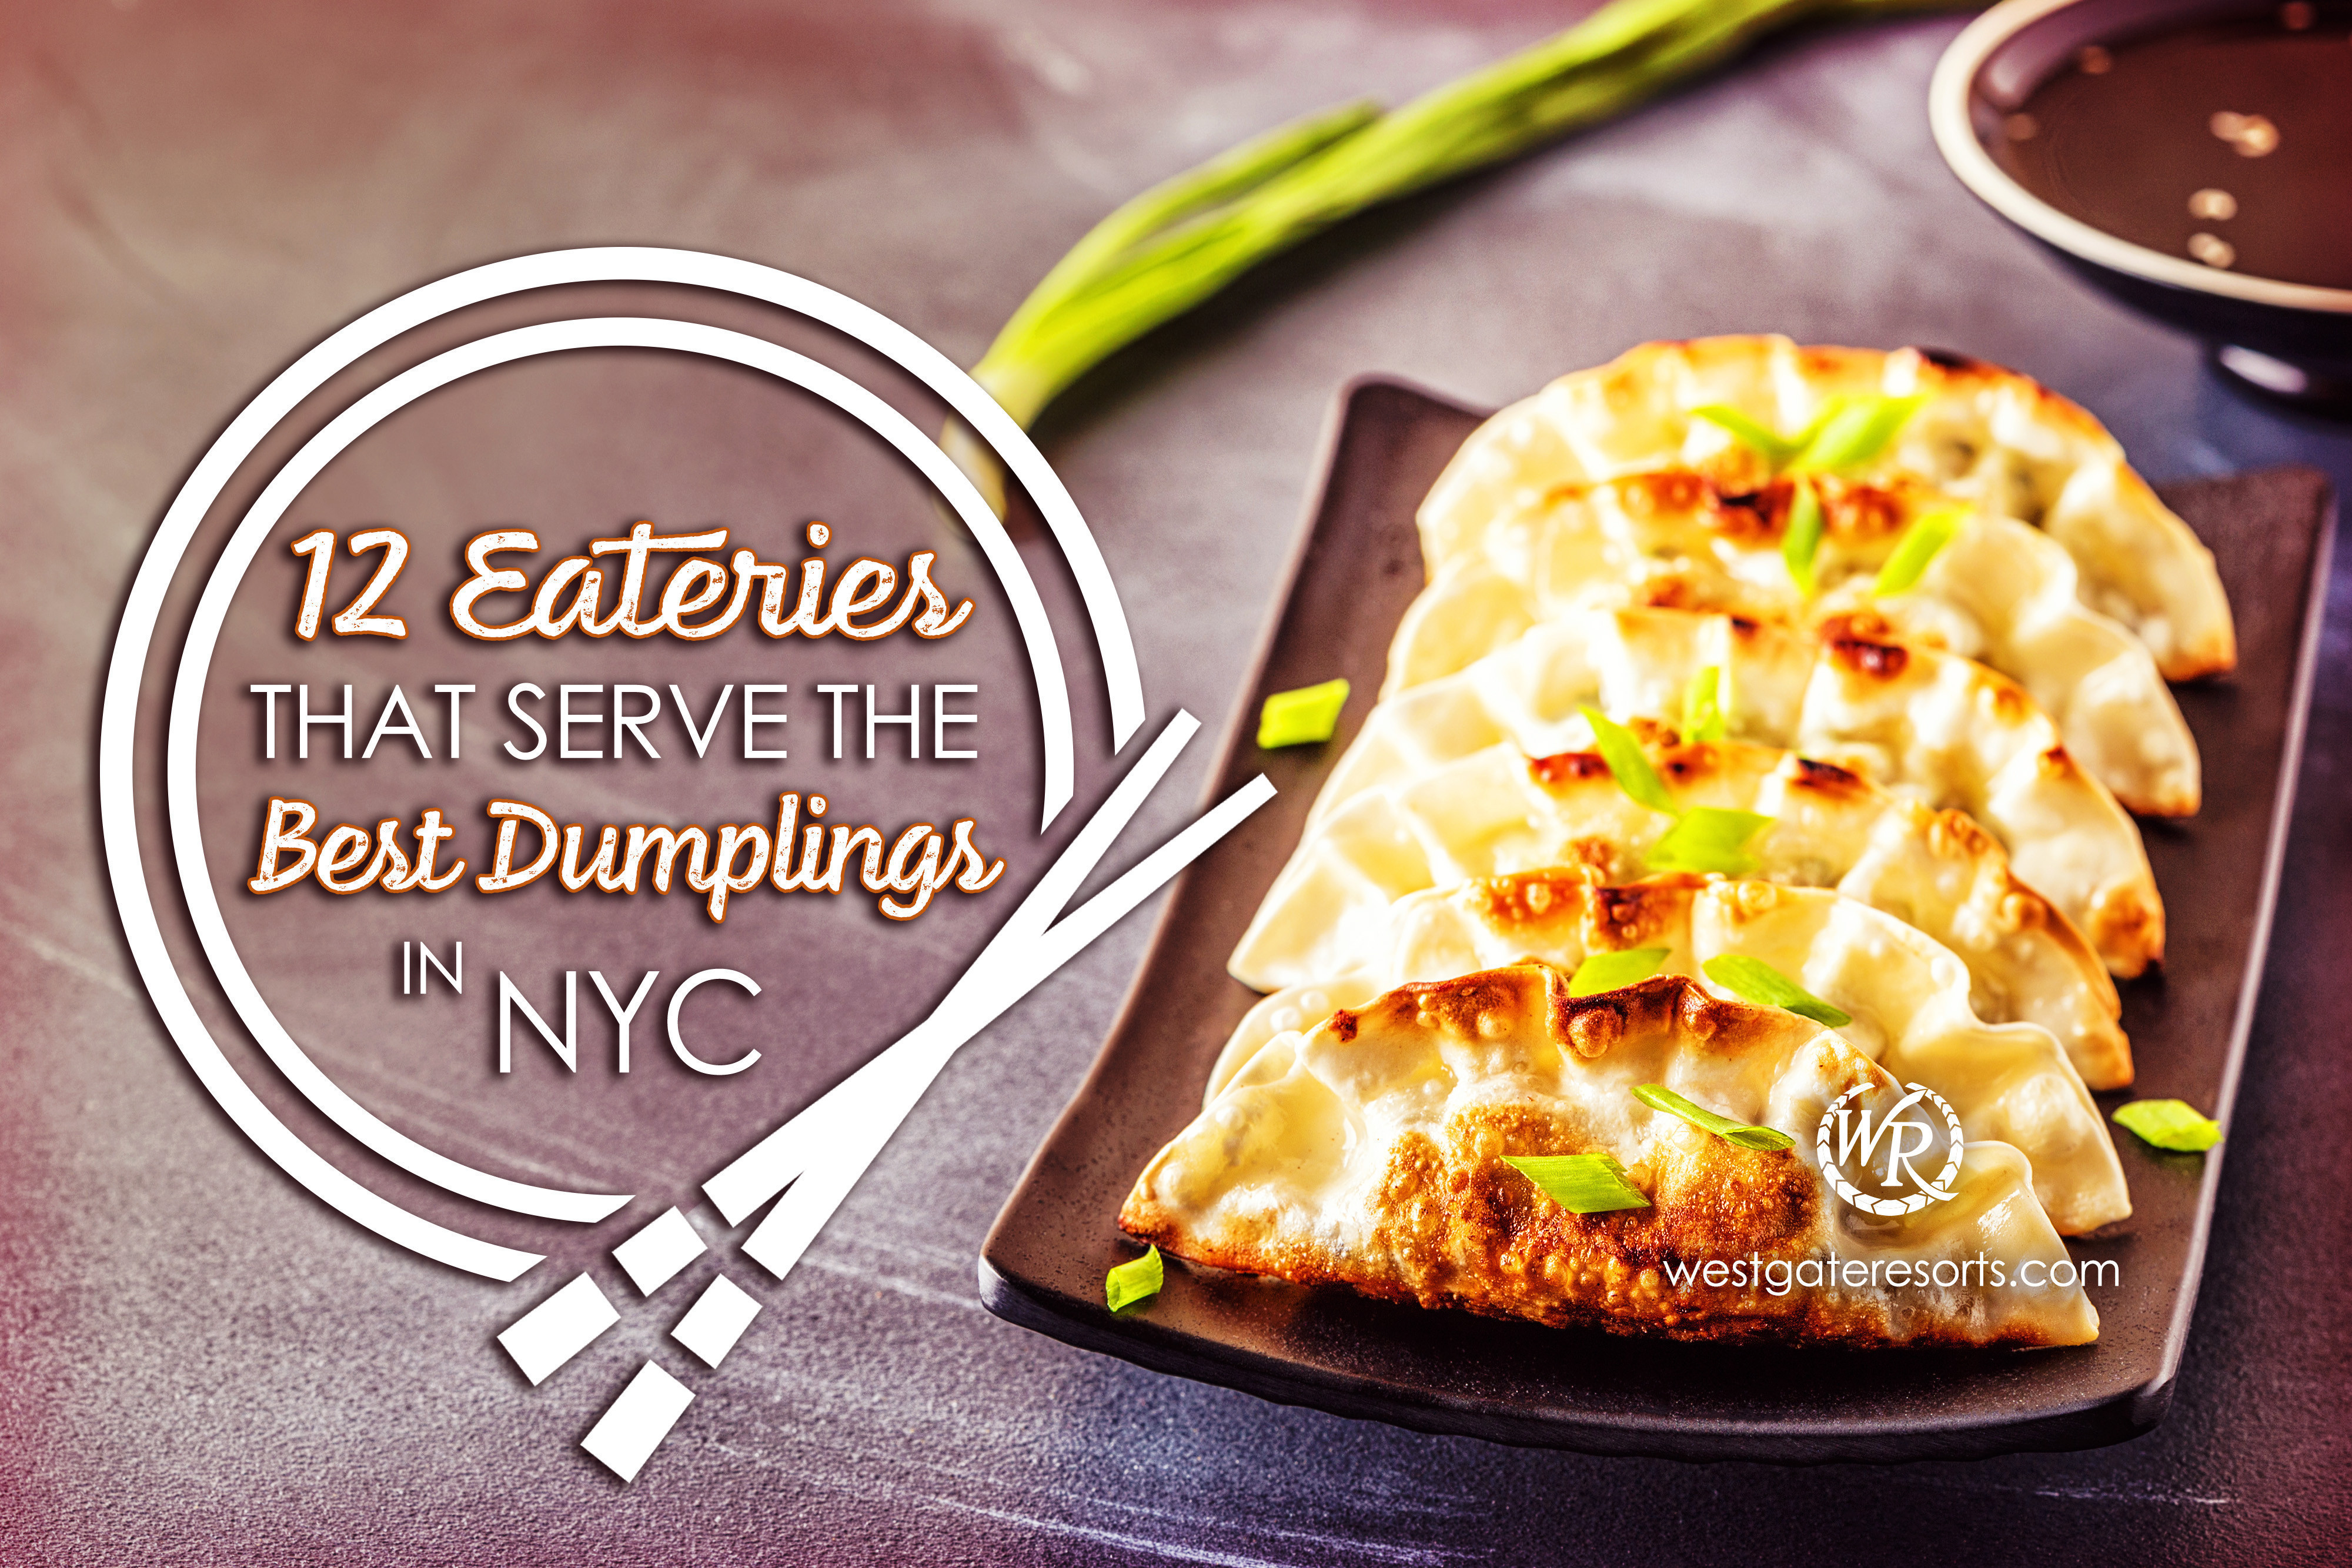 12 Eateries that Serve the Best Dumplings in NYC